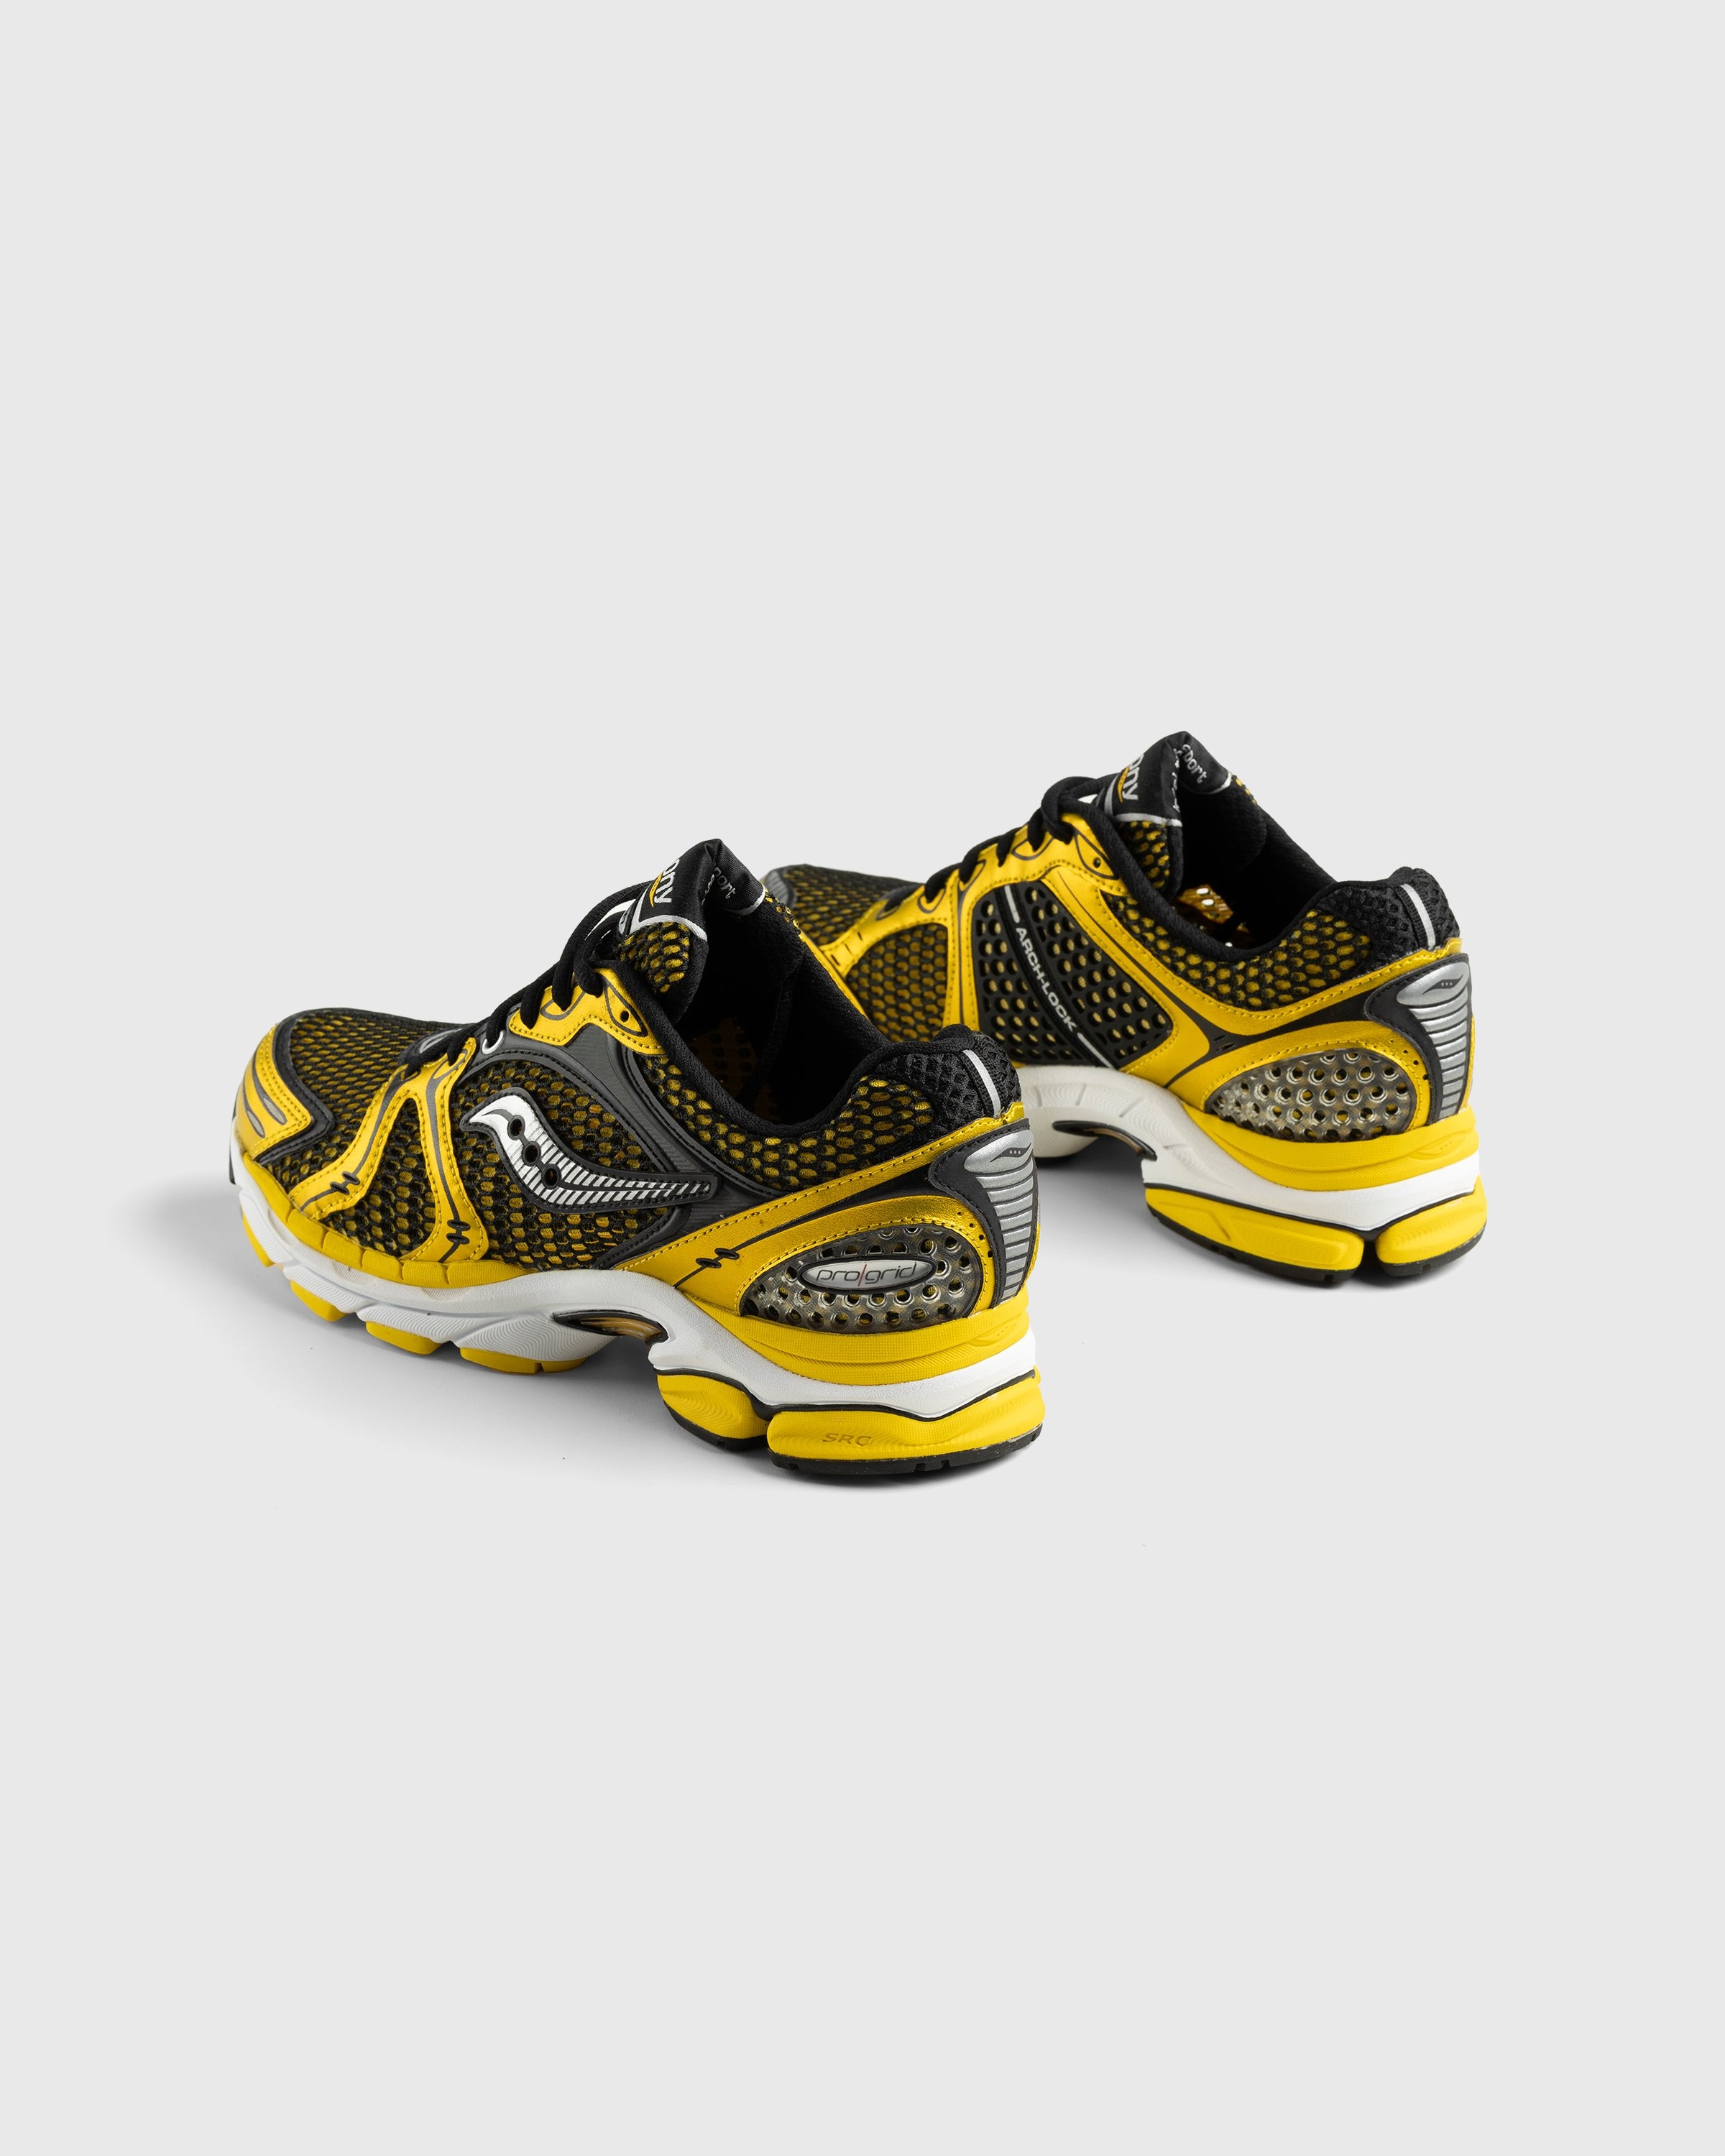 Saucony – ProGrid Triumph 4 Lemon - Low Top Sneakers - Yellow - Image 4